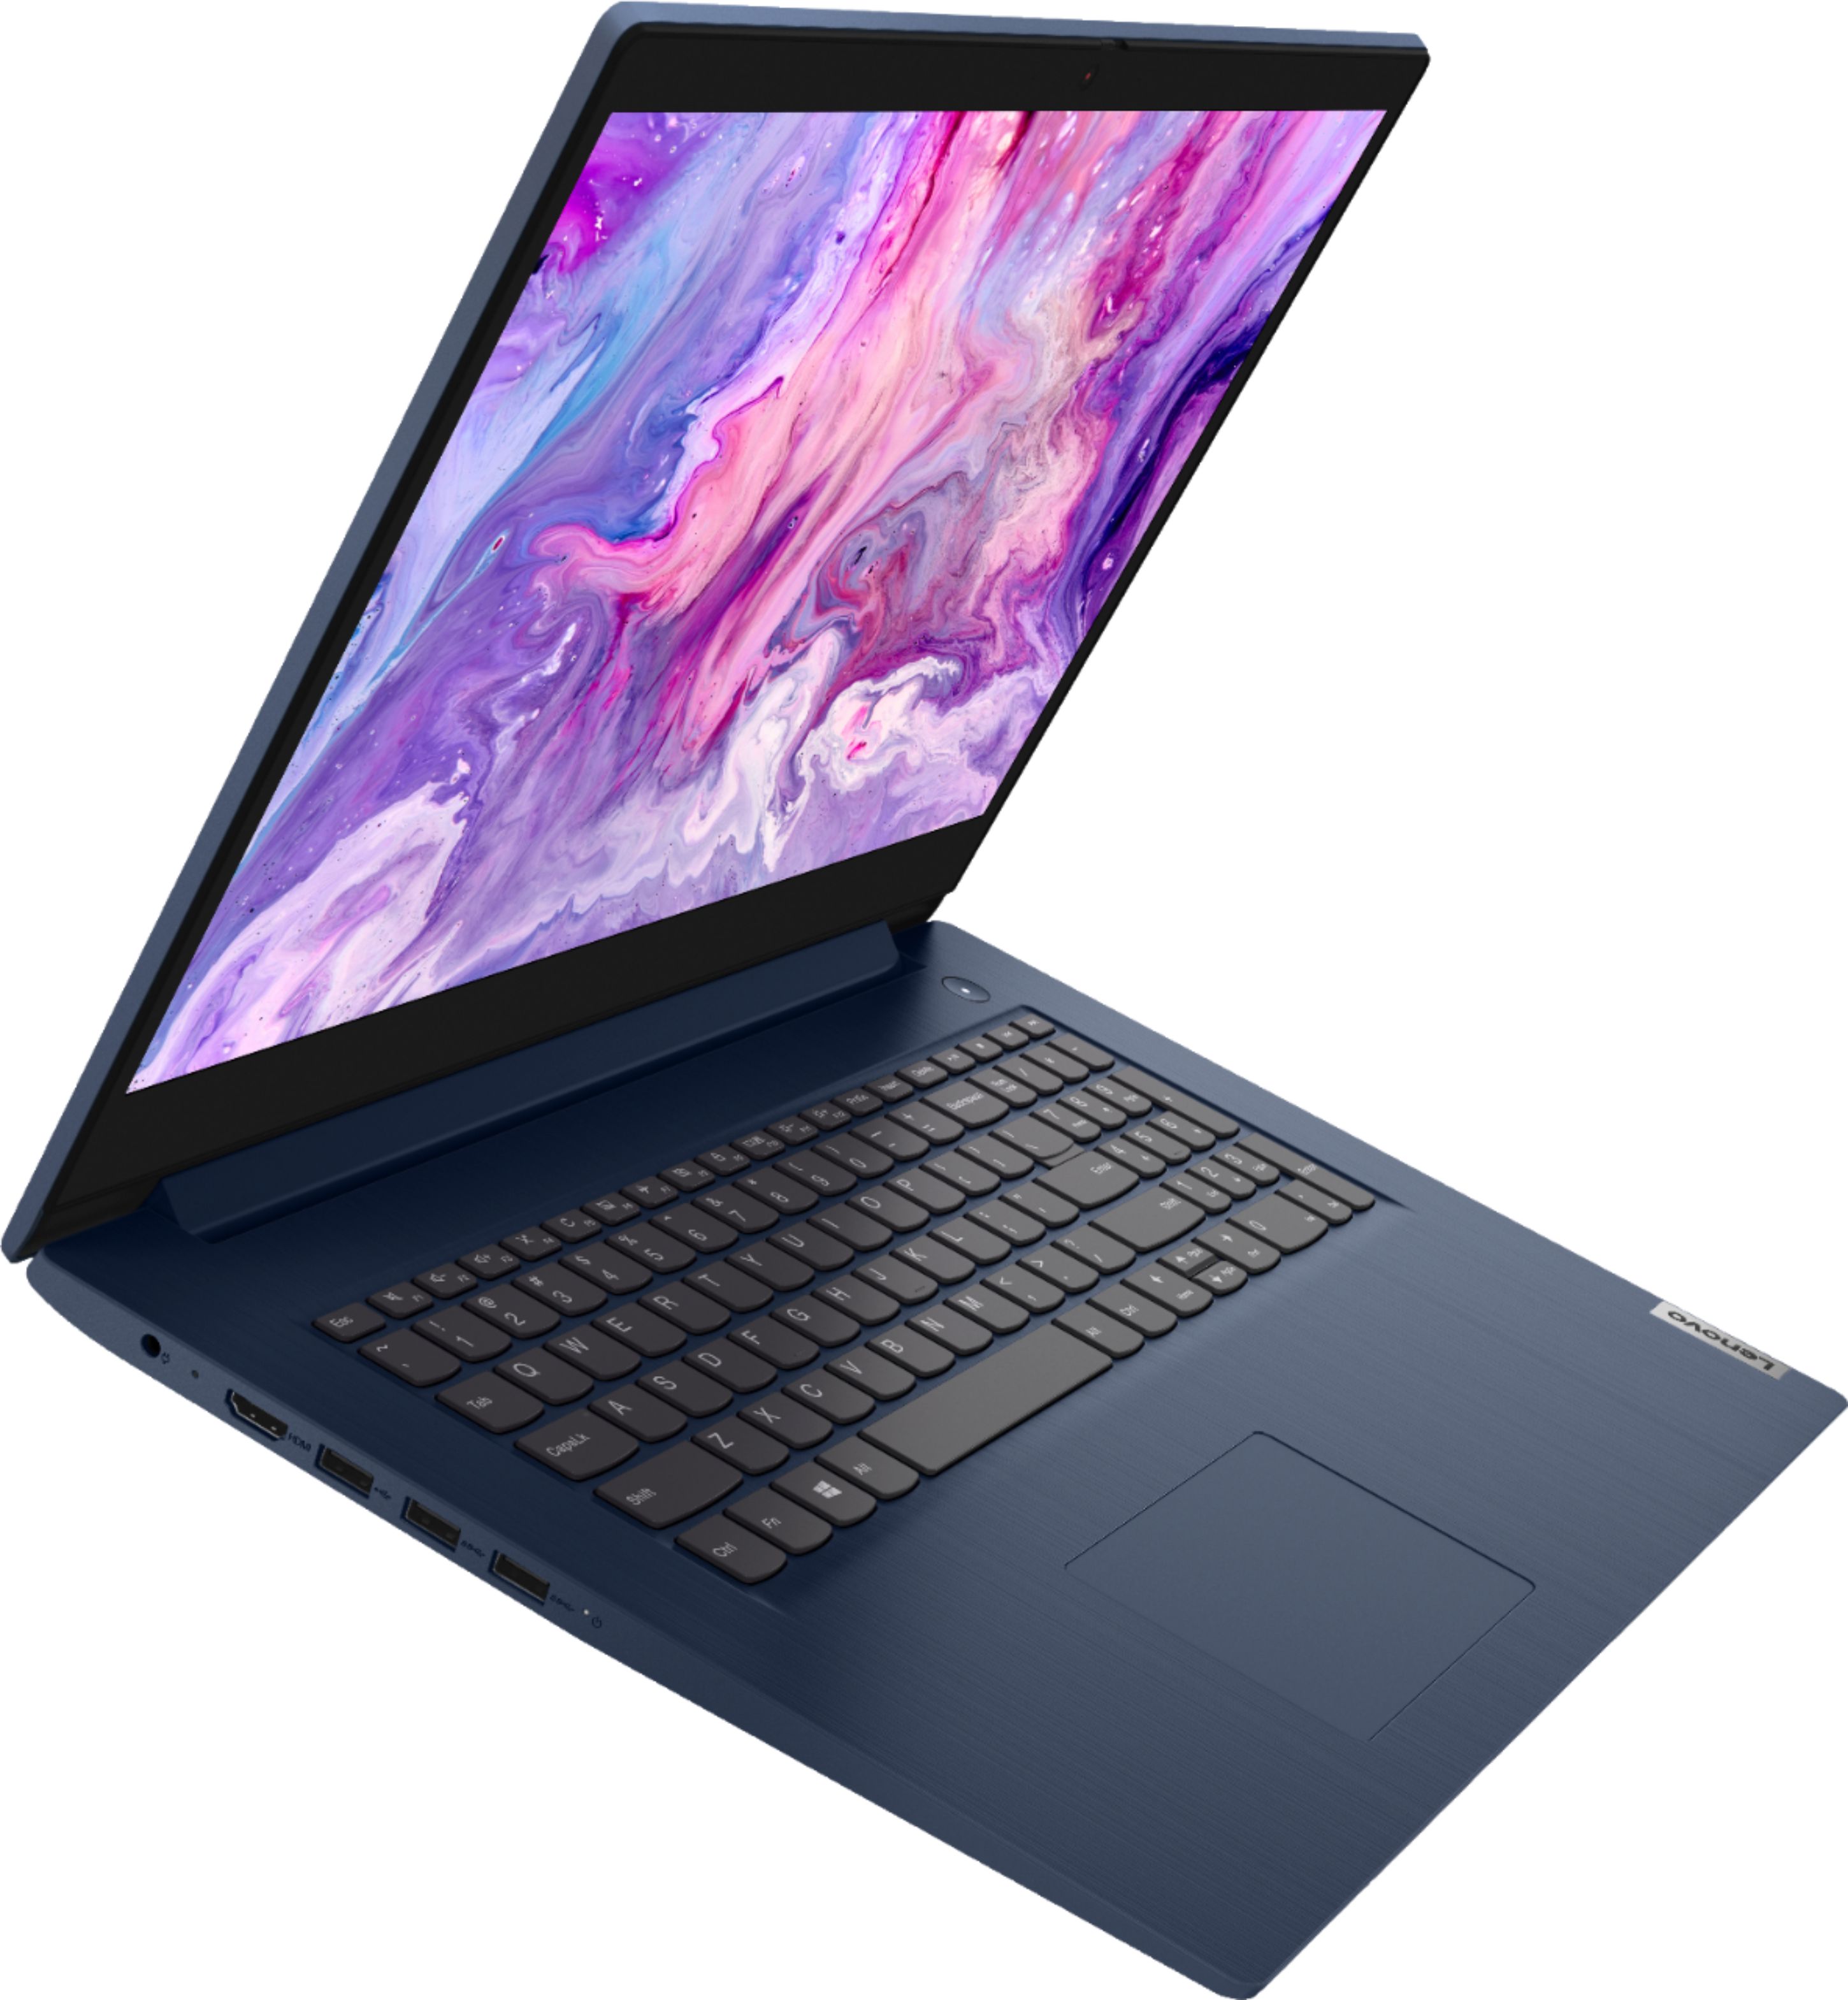 Angle View: Lenovo - Ideapad 3 17 17" Laptop - Intel Core i5 - 8GB Memory - 1TB HDD - Abyss Blue